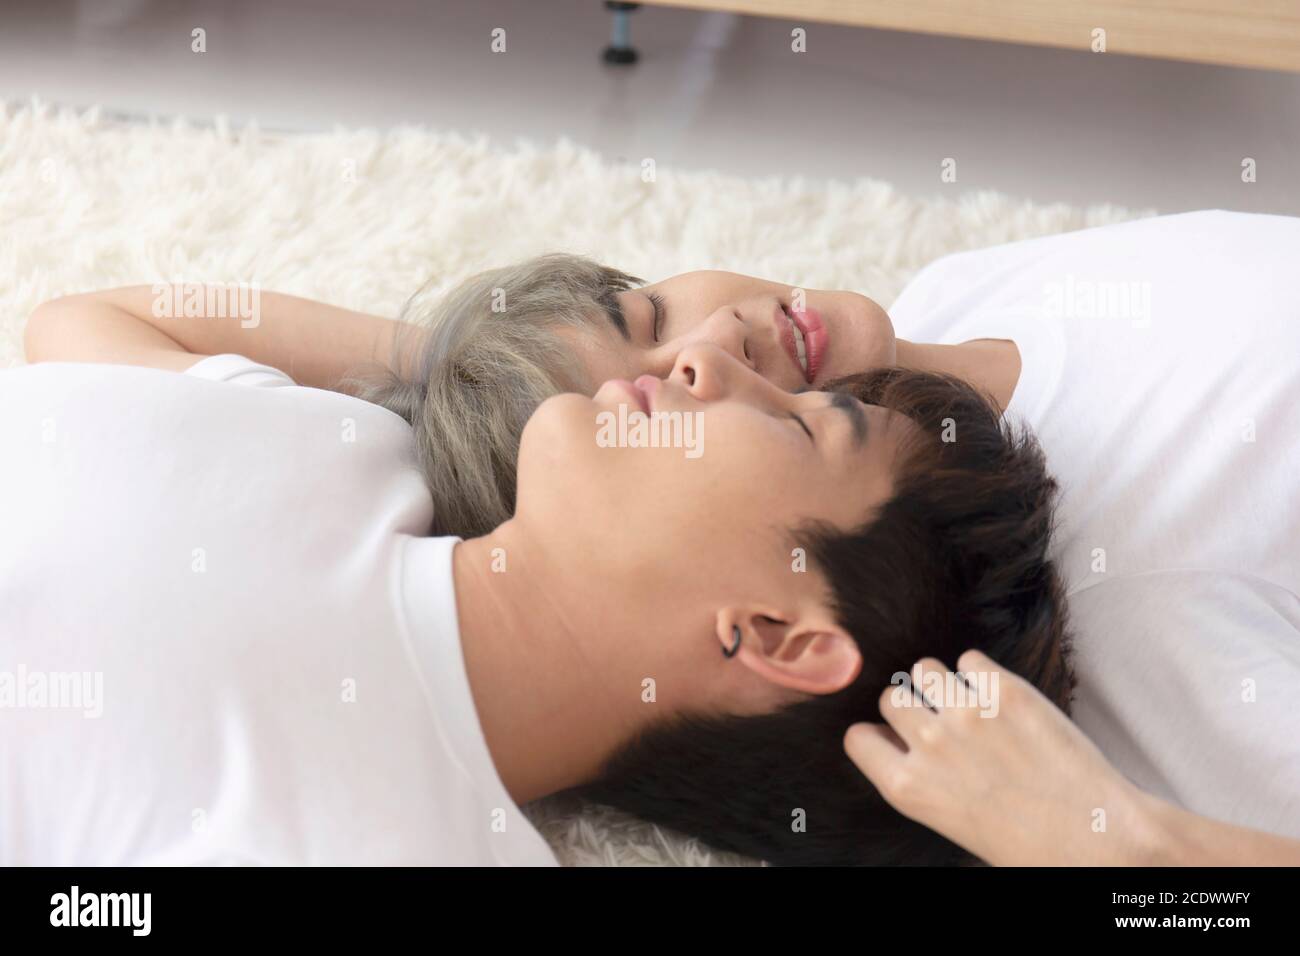 Gay Couples Love Men Asian Young Men LGBT Concepts Stock Photo